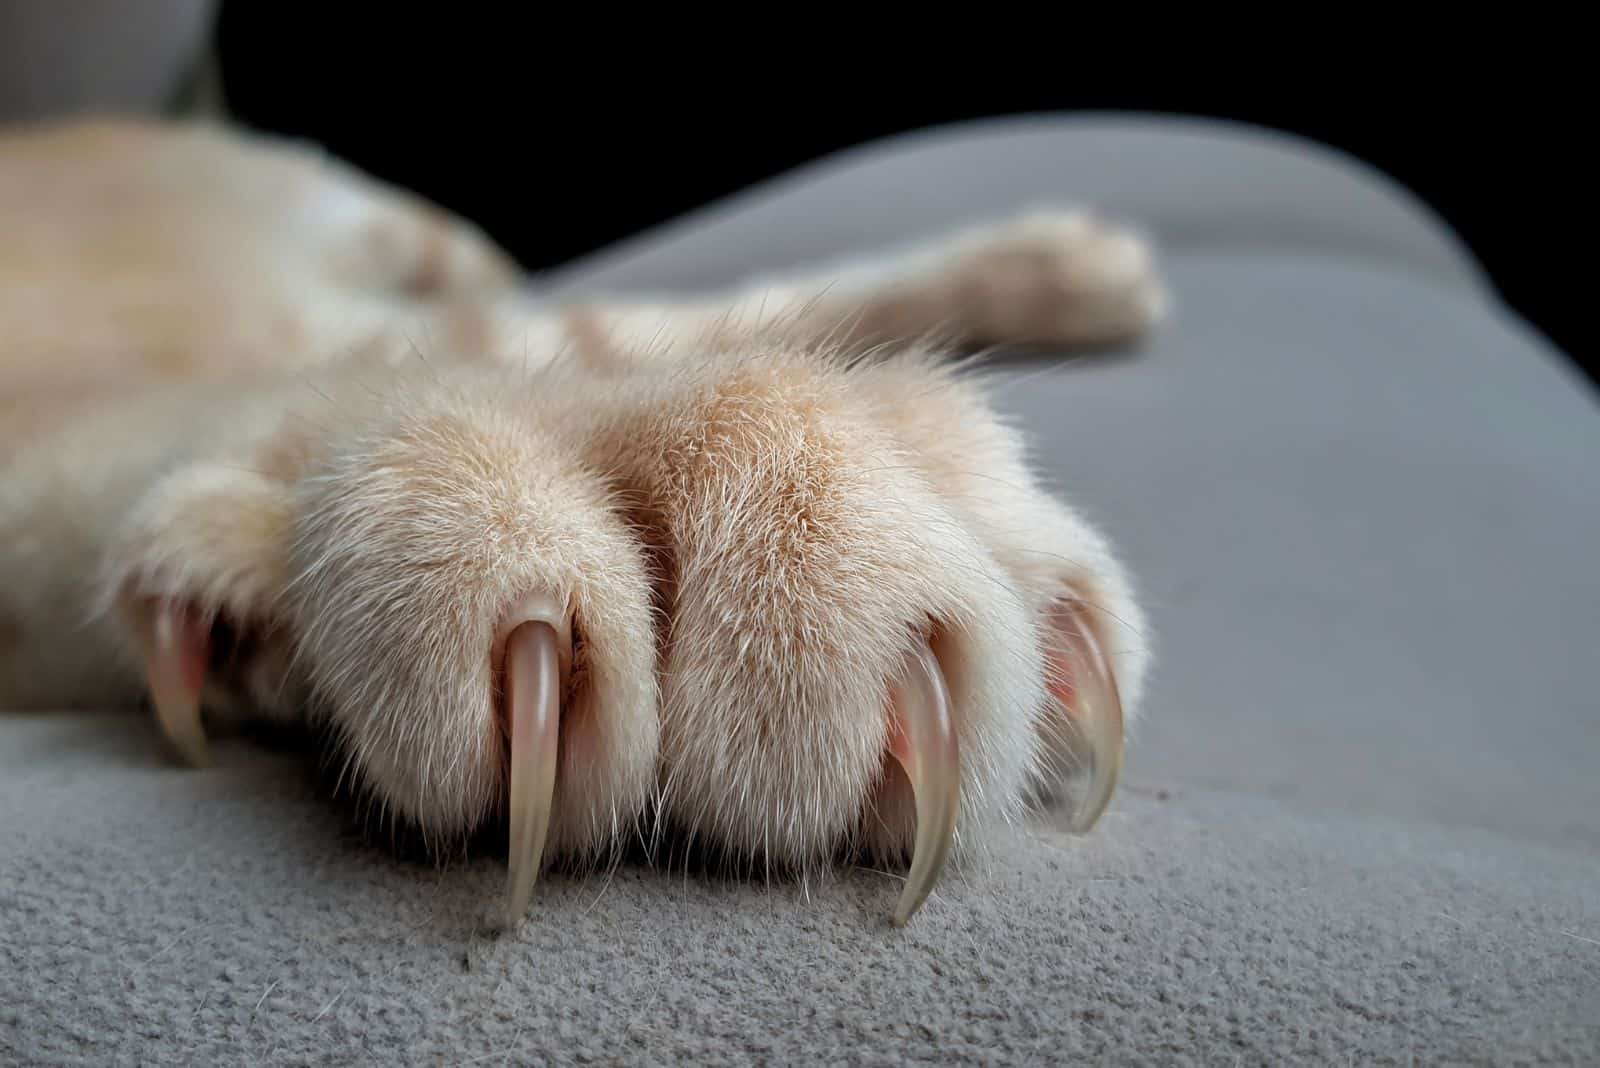 Cat Claws